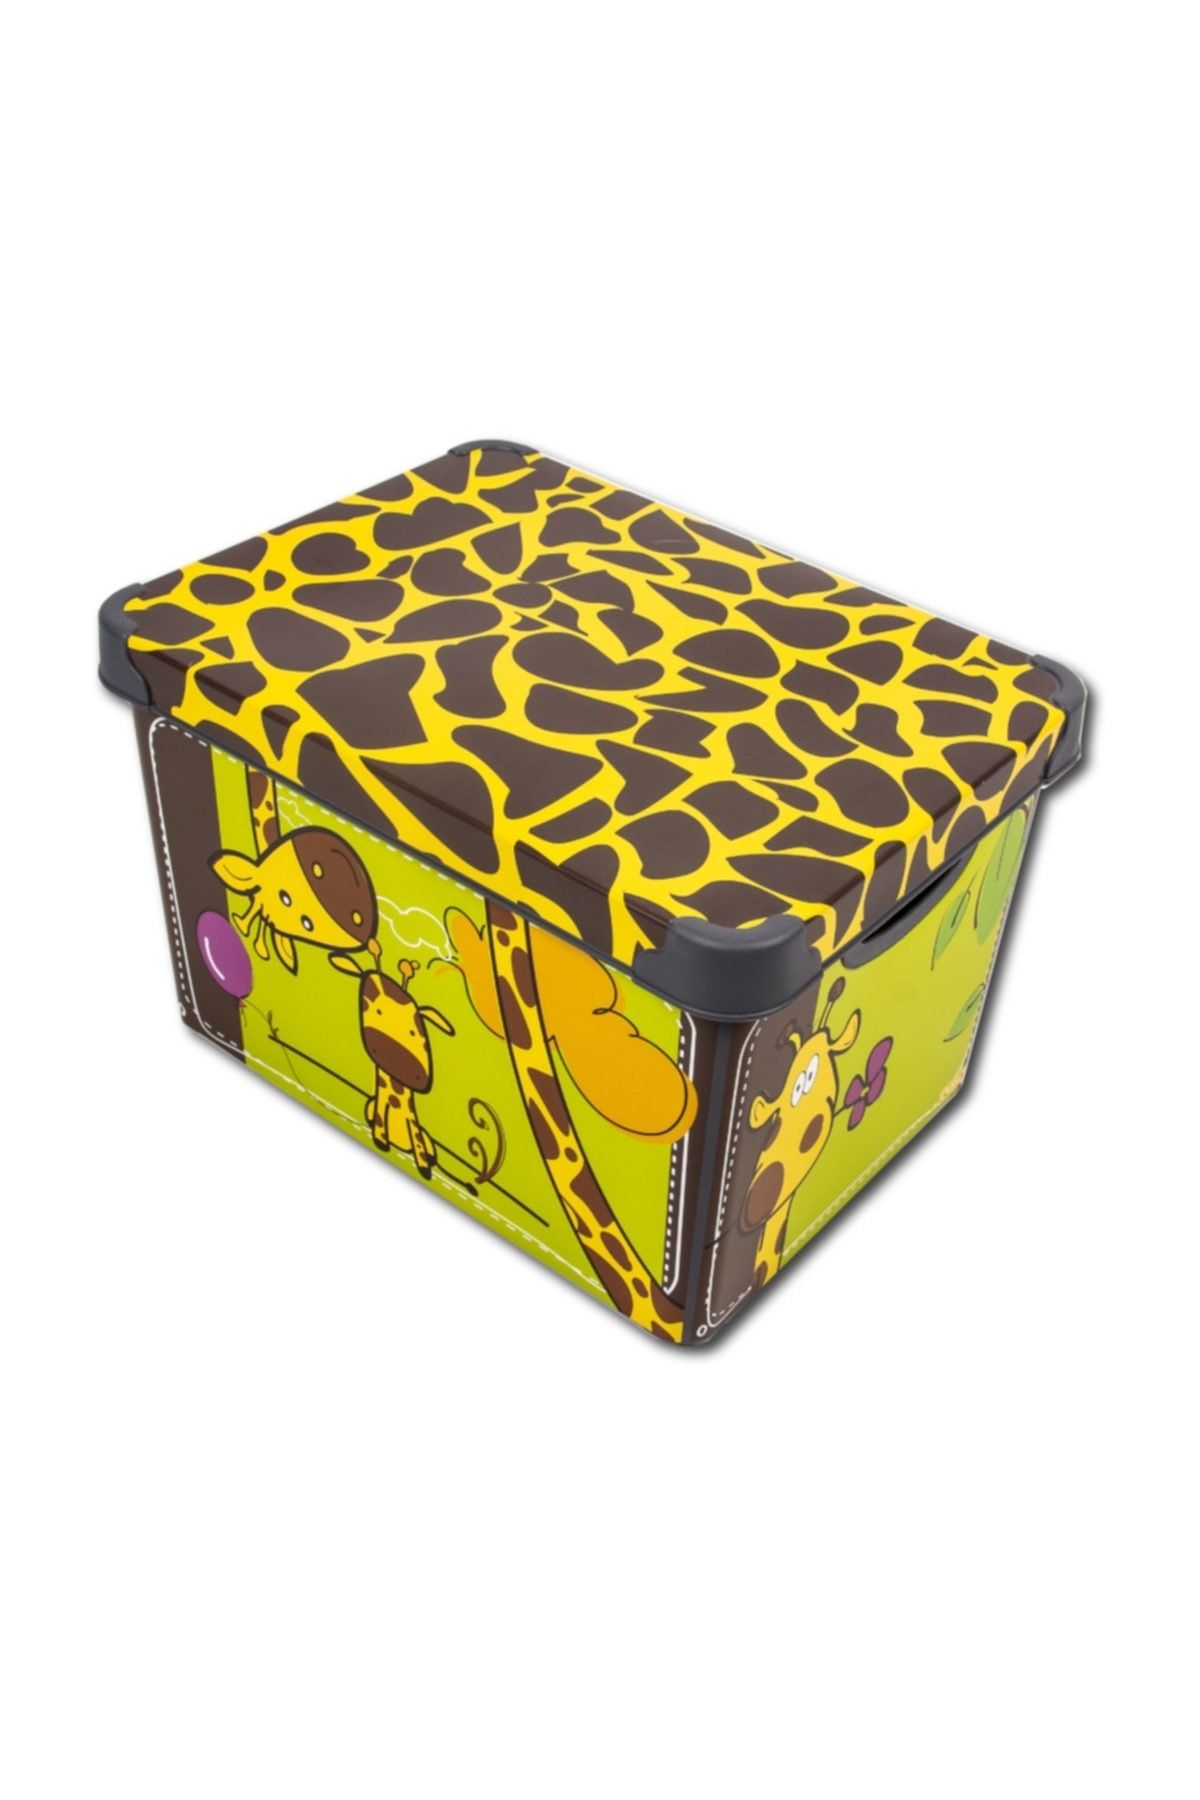 QUTU Style Box Giraffe - 20 Litre Dekoratif Saklama Kutusu